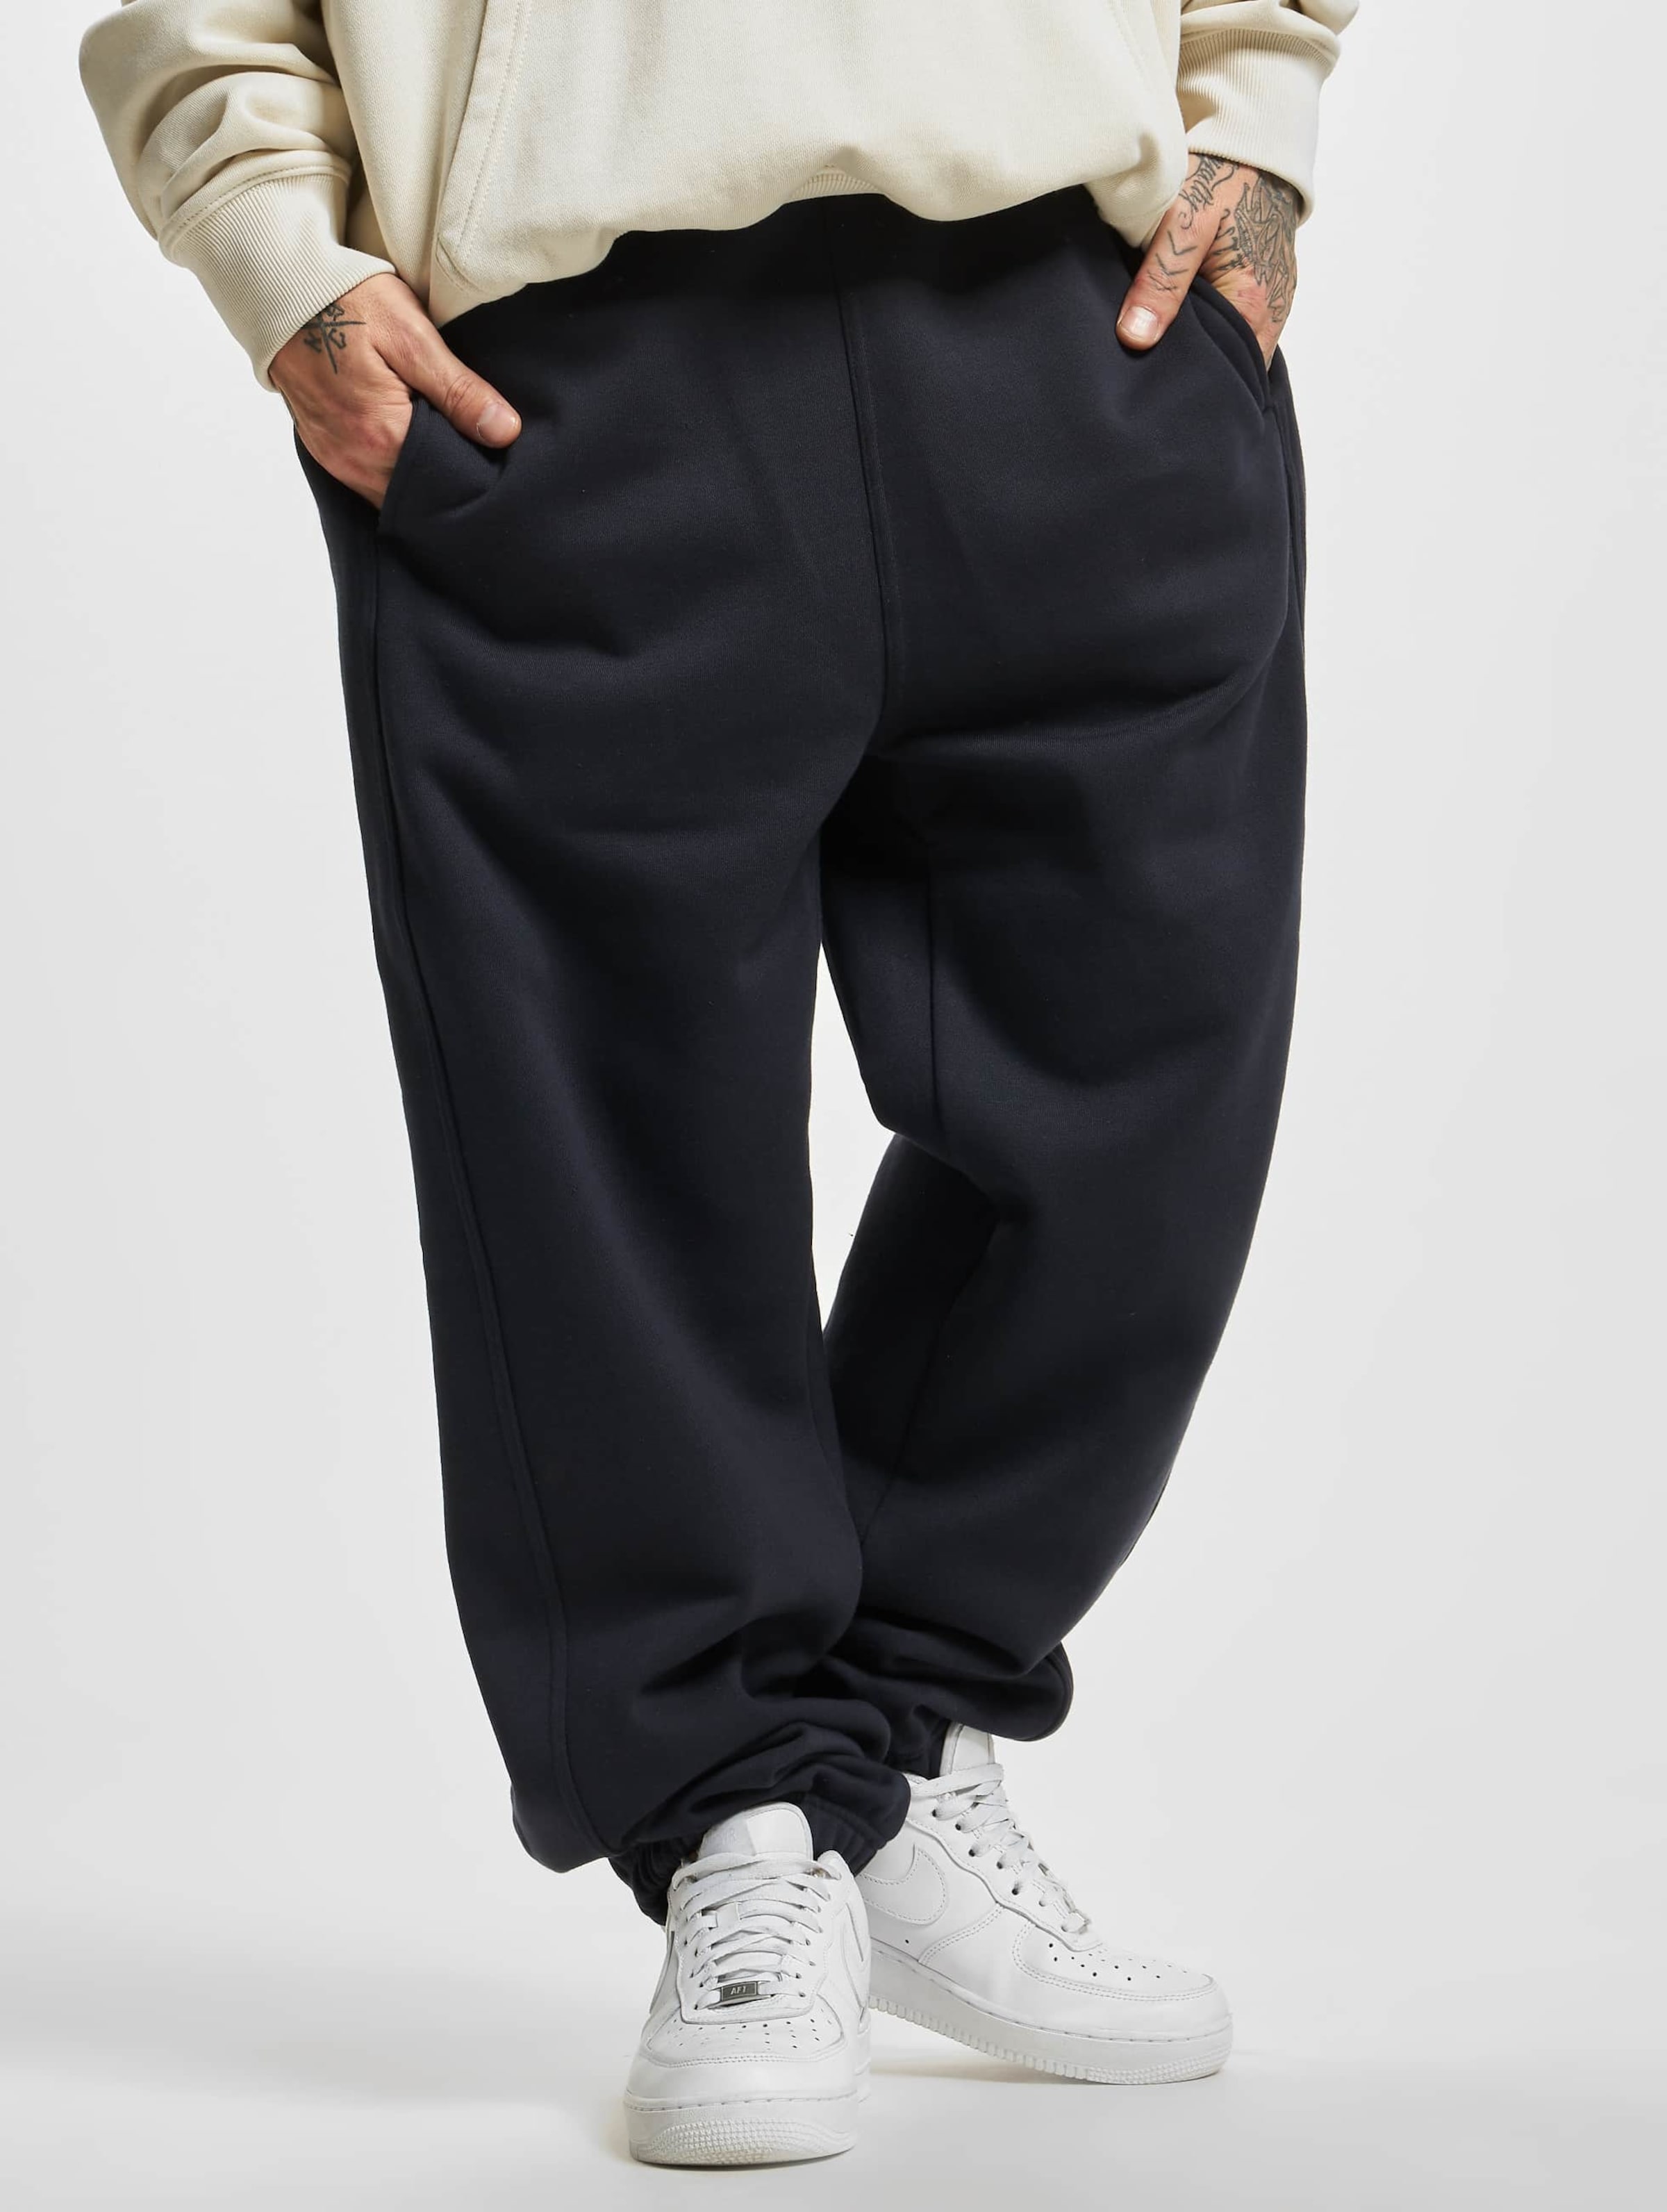 Men Loose Fit Pants Hip Hop Sports Casual Sweatpants Elastic Waist Trouser  Baggy 